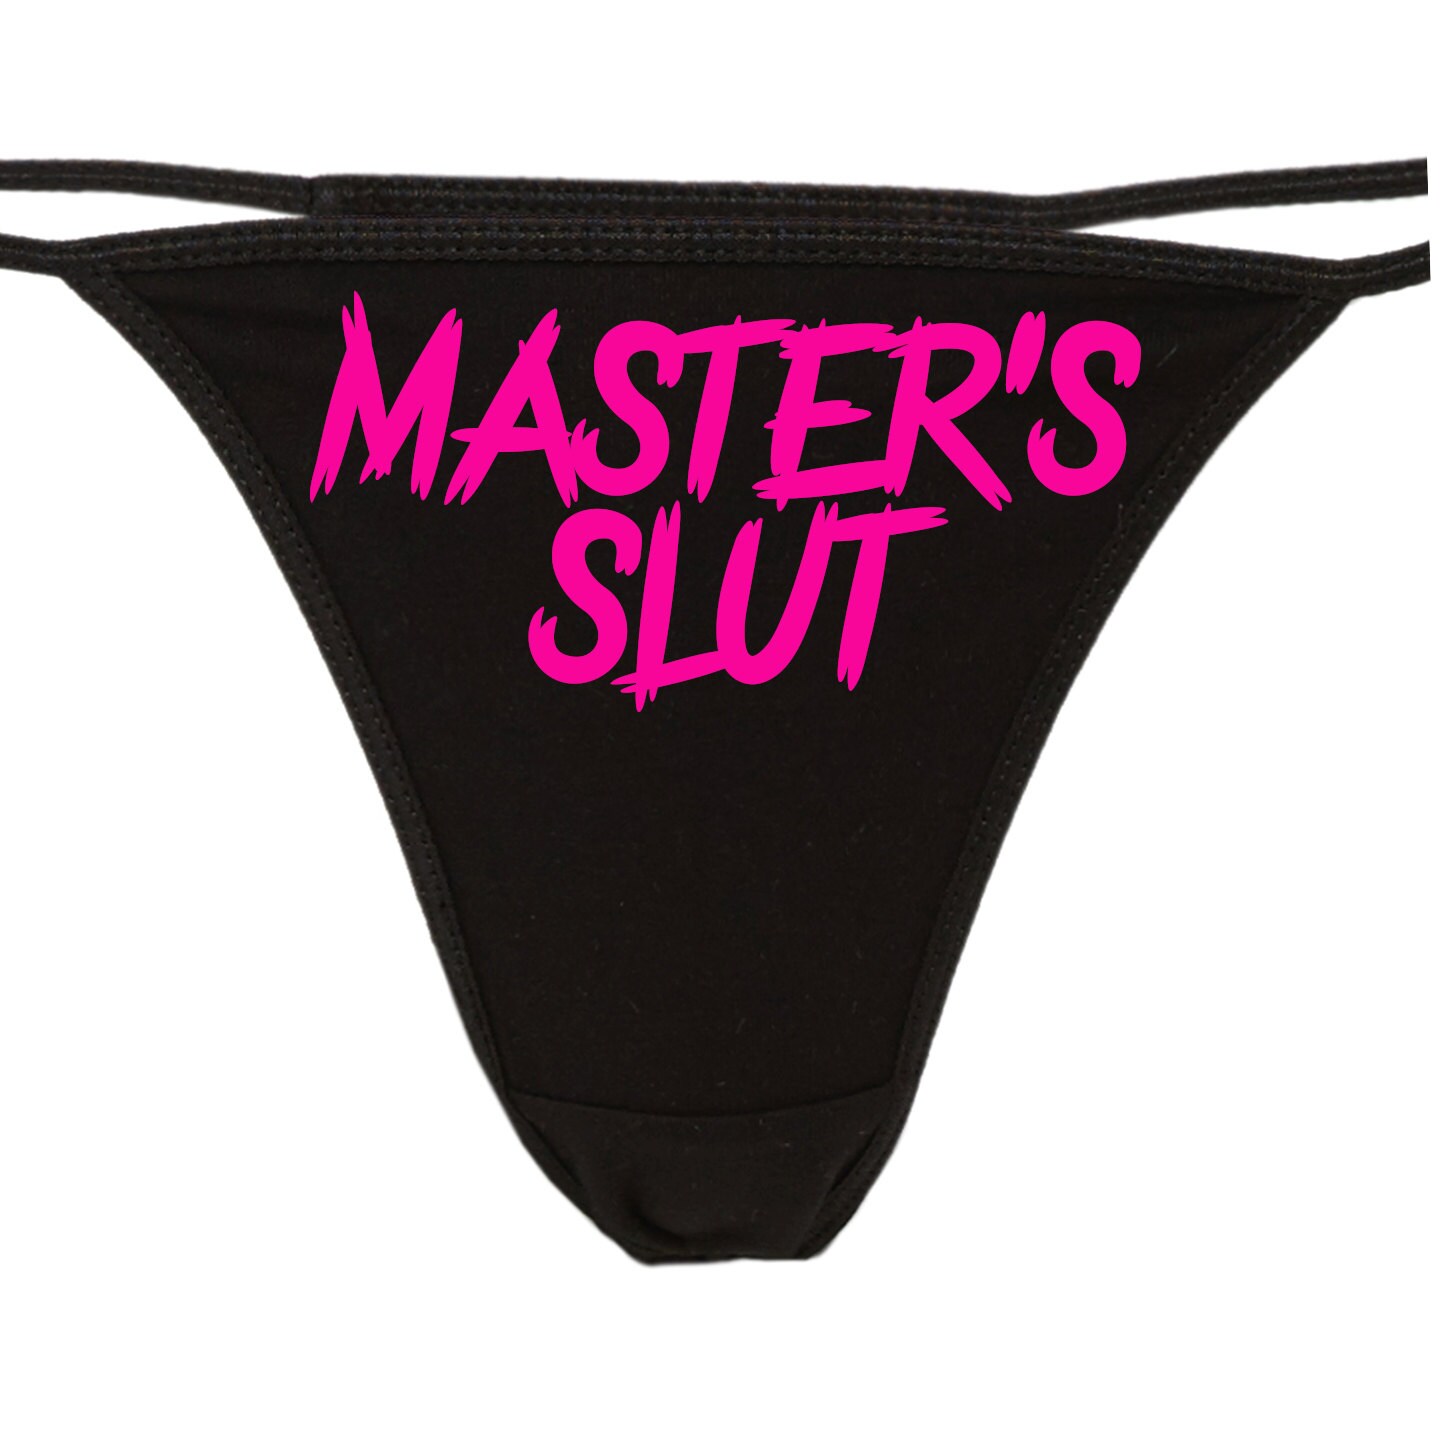 Masters Slut Flirty Cgl Thong For Kitten Show Your Slutty